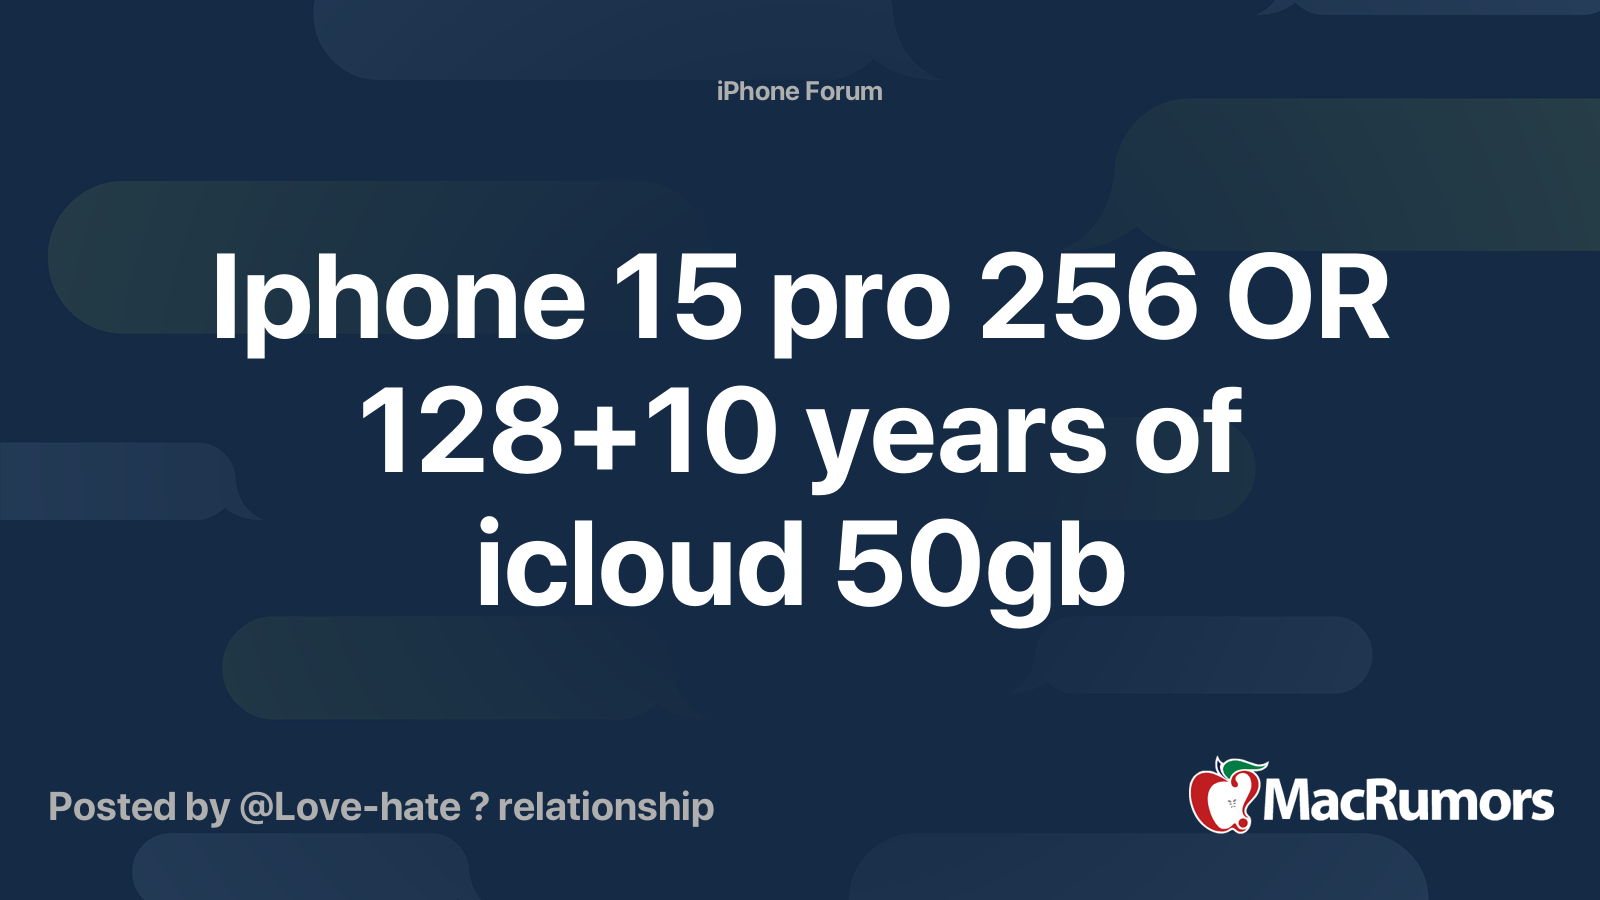 Iphone 15 pro 256 OR 128+10 years of icloud 50gb